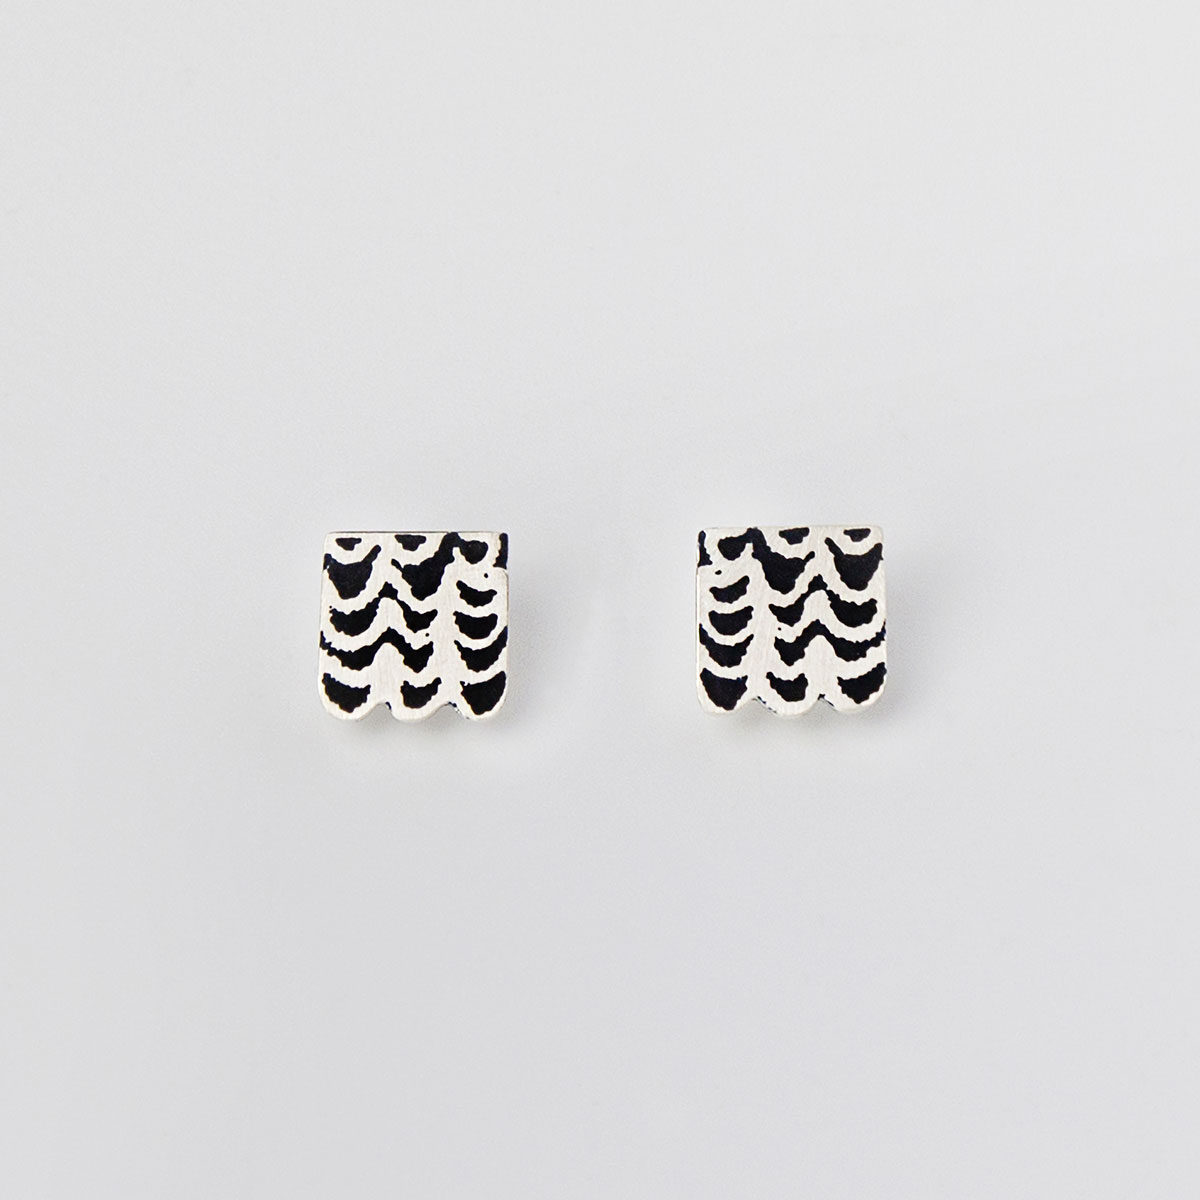 ‘Weave’ Silver and Black Stud Earrings